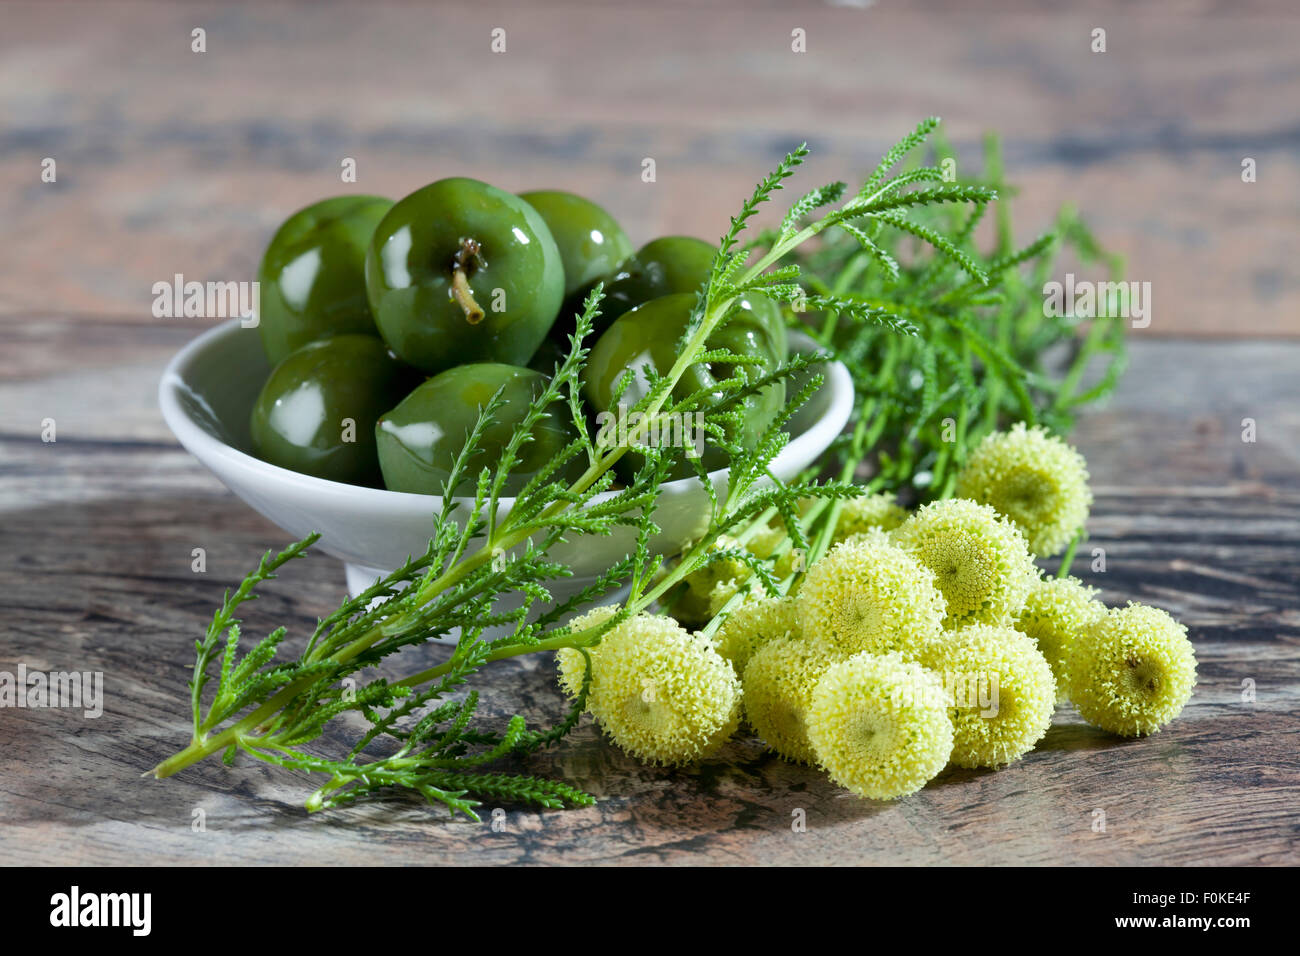 Bowl of green olives and green santolina Stock Photo